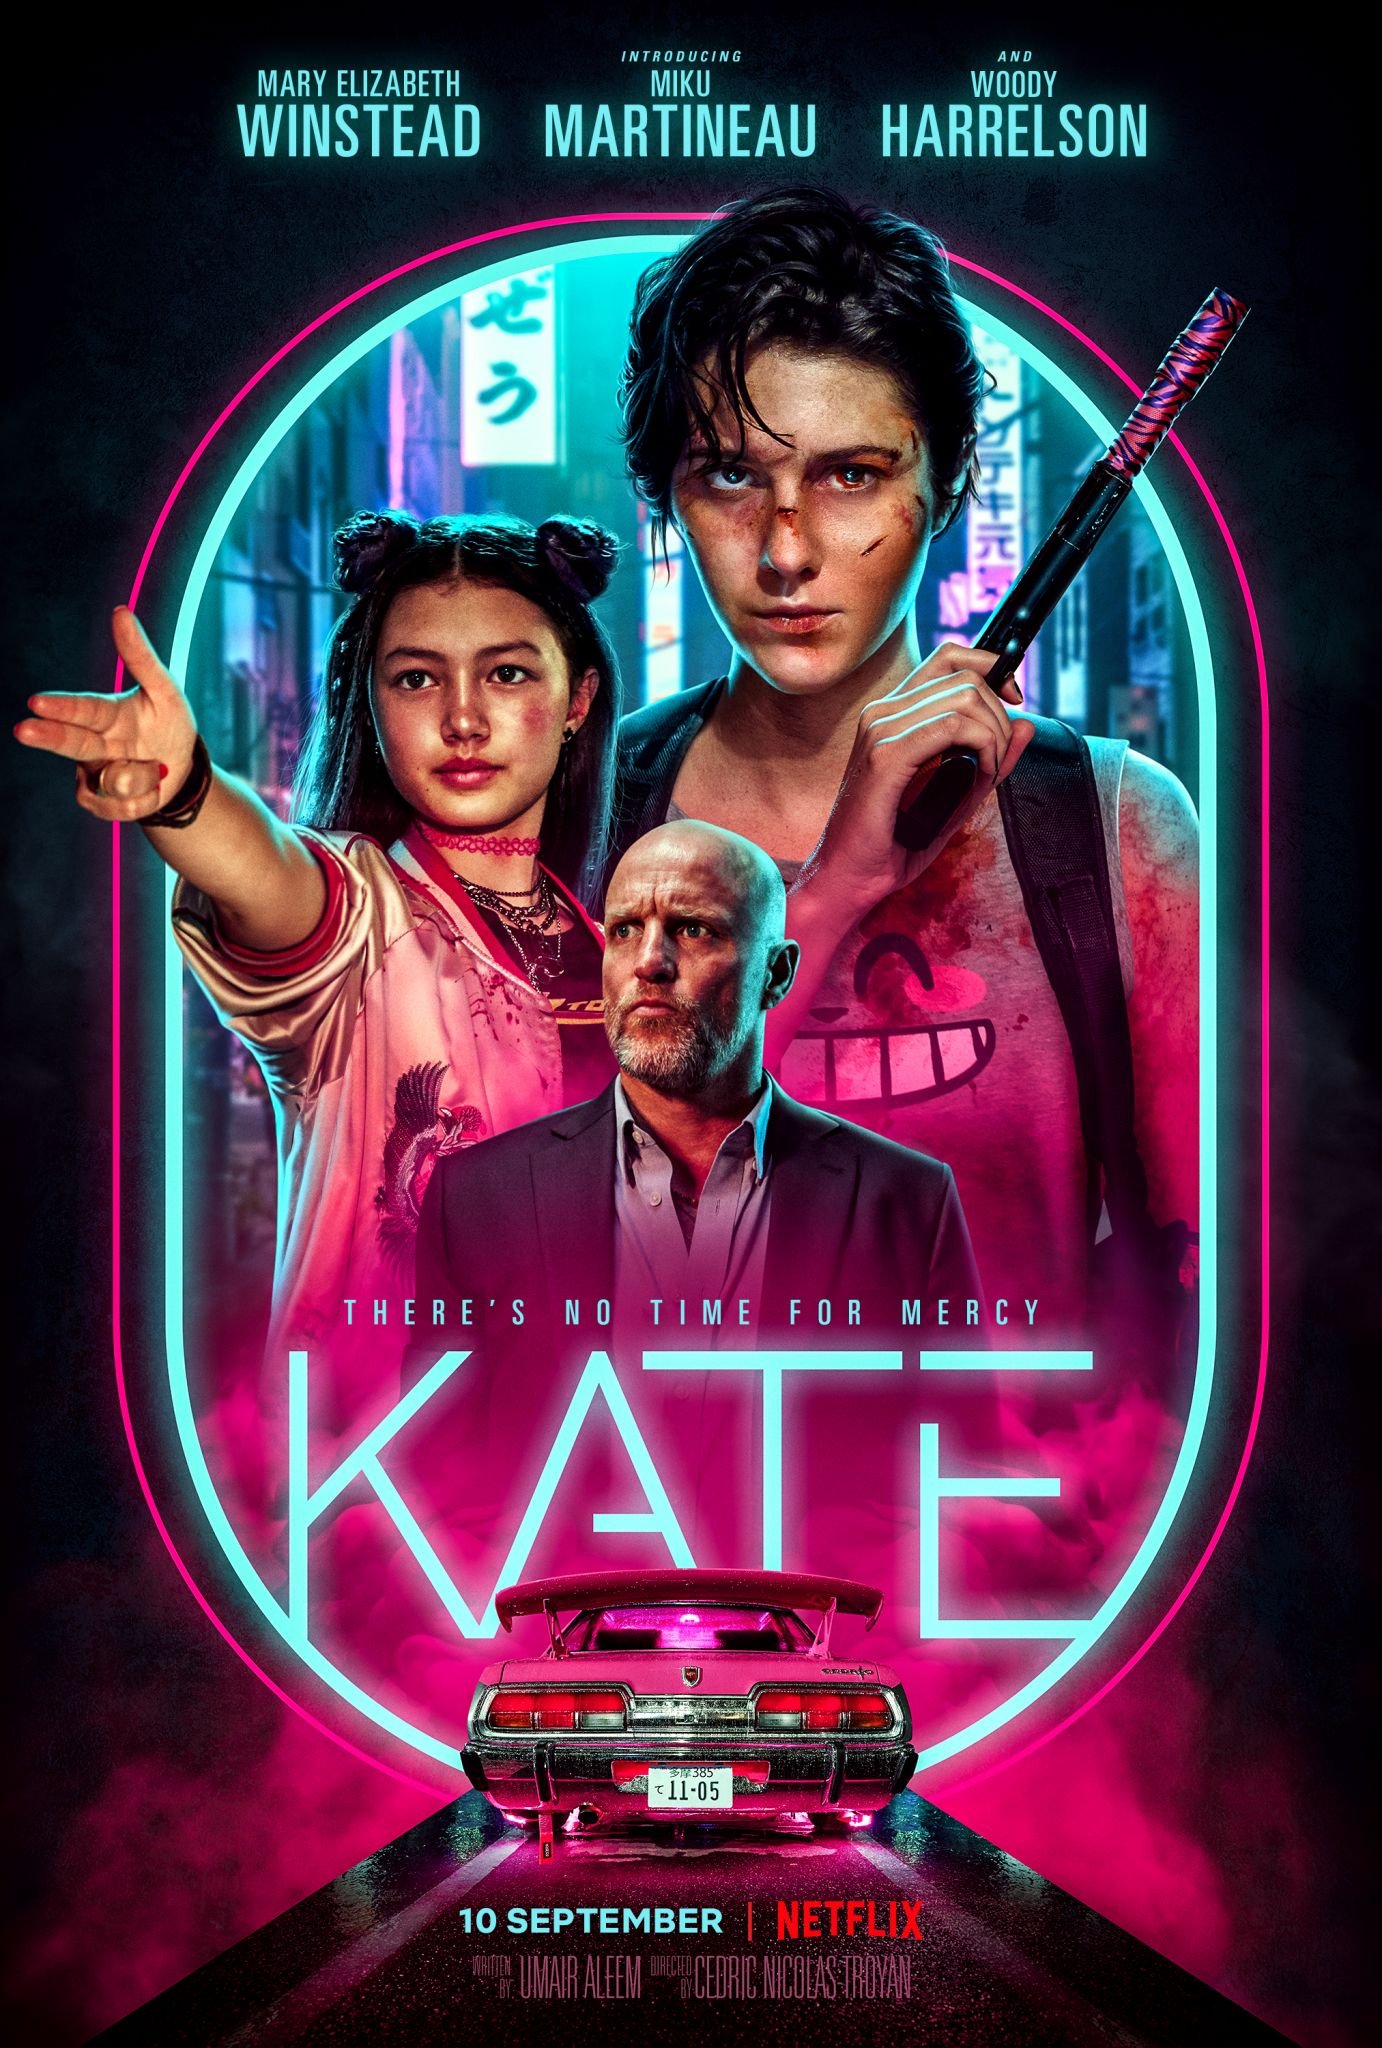 Kate Netflix's Poster